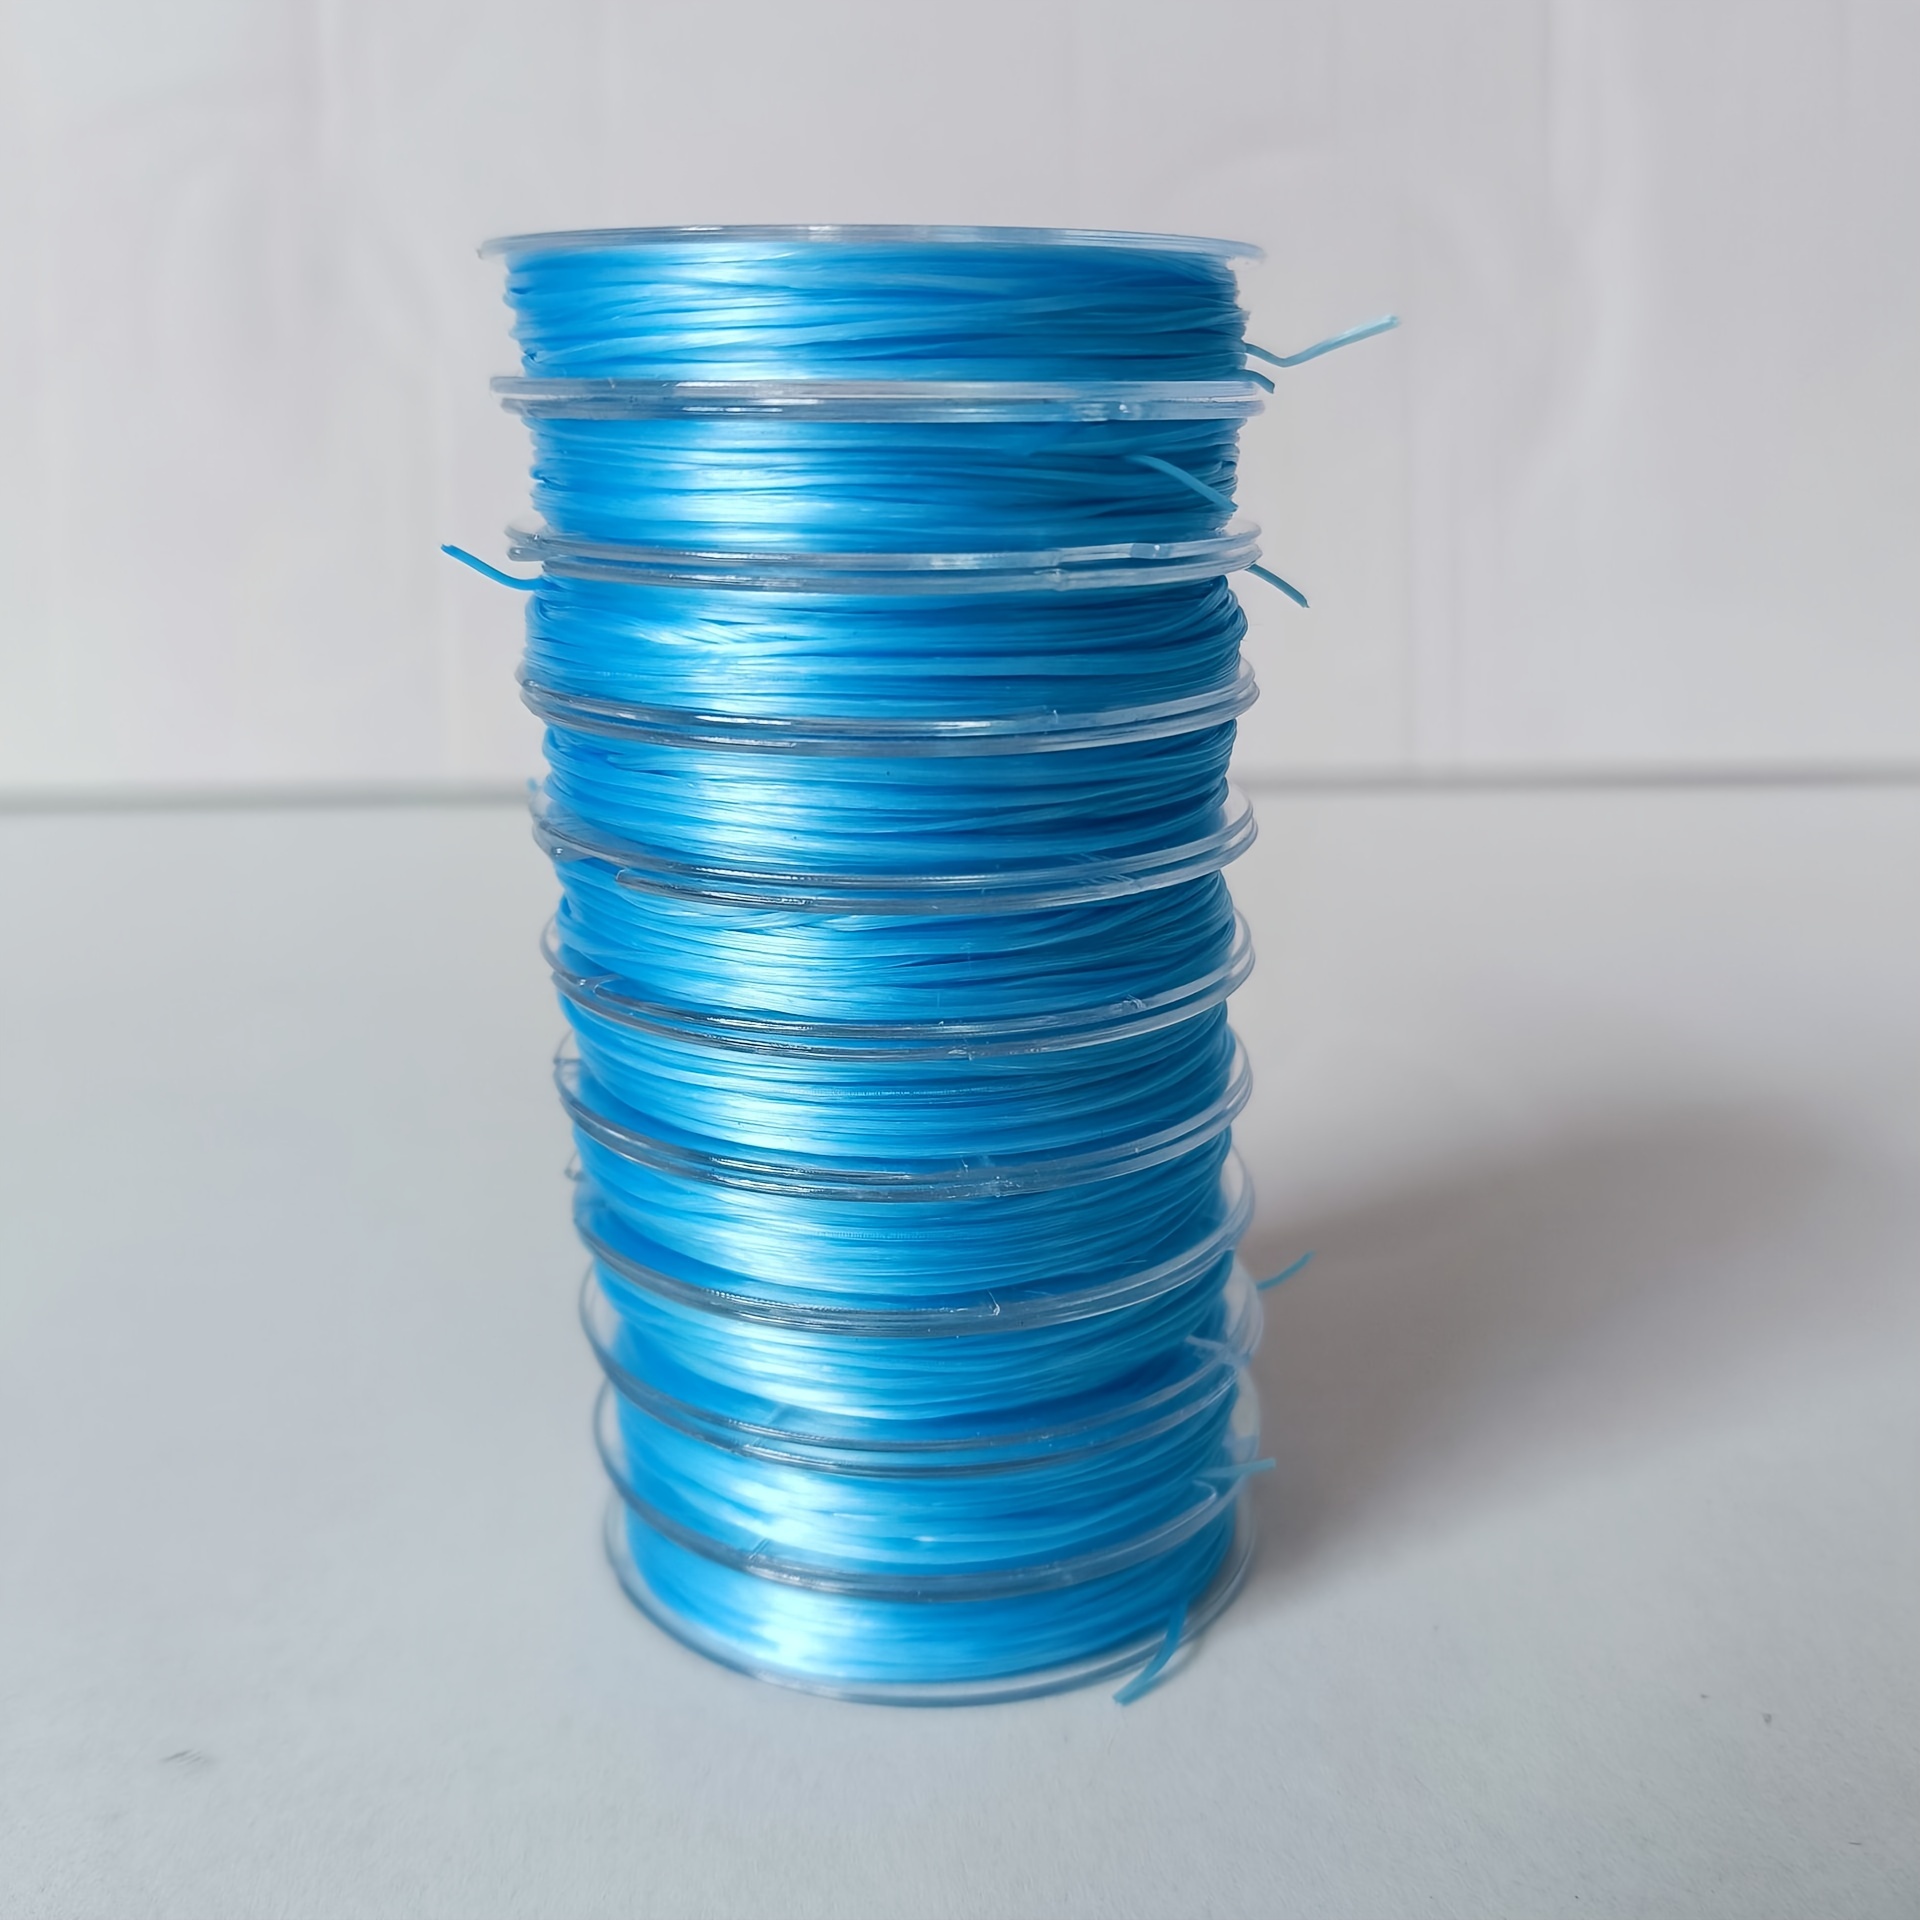 9 Plastic wire roll